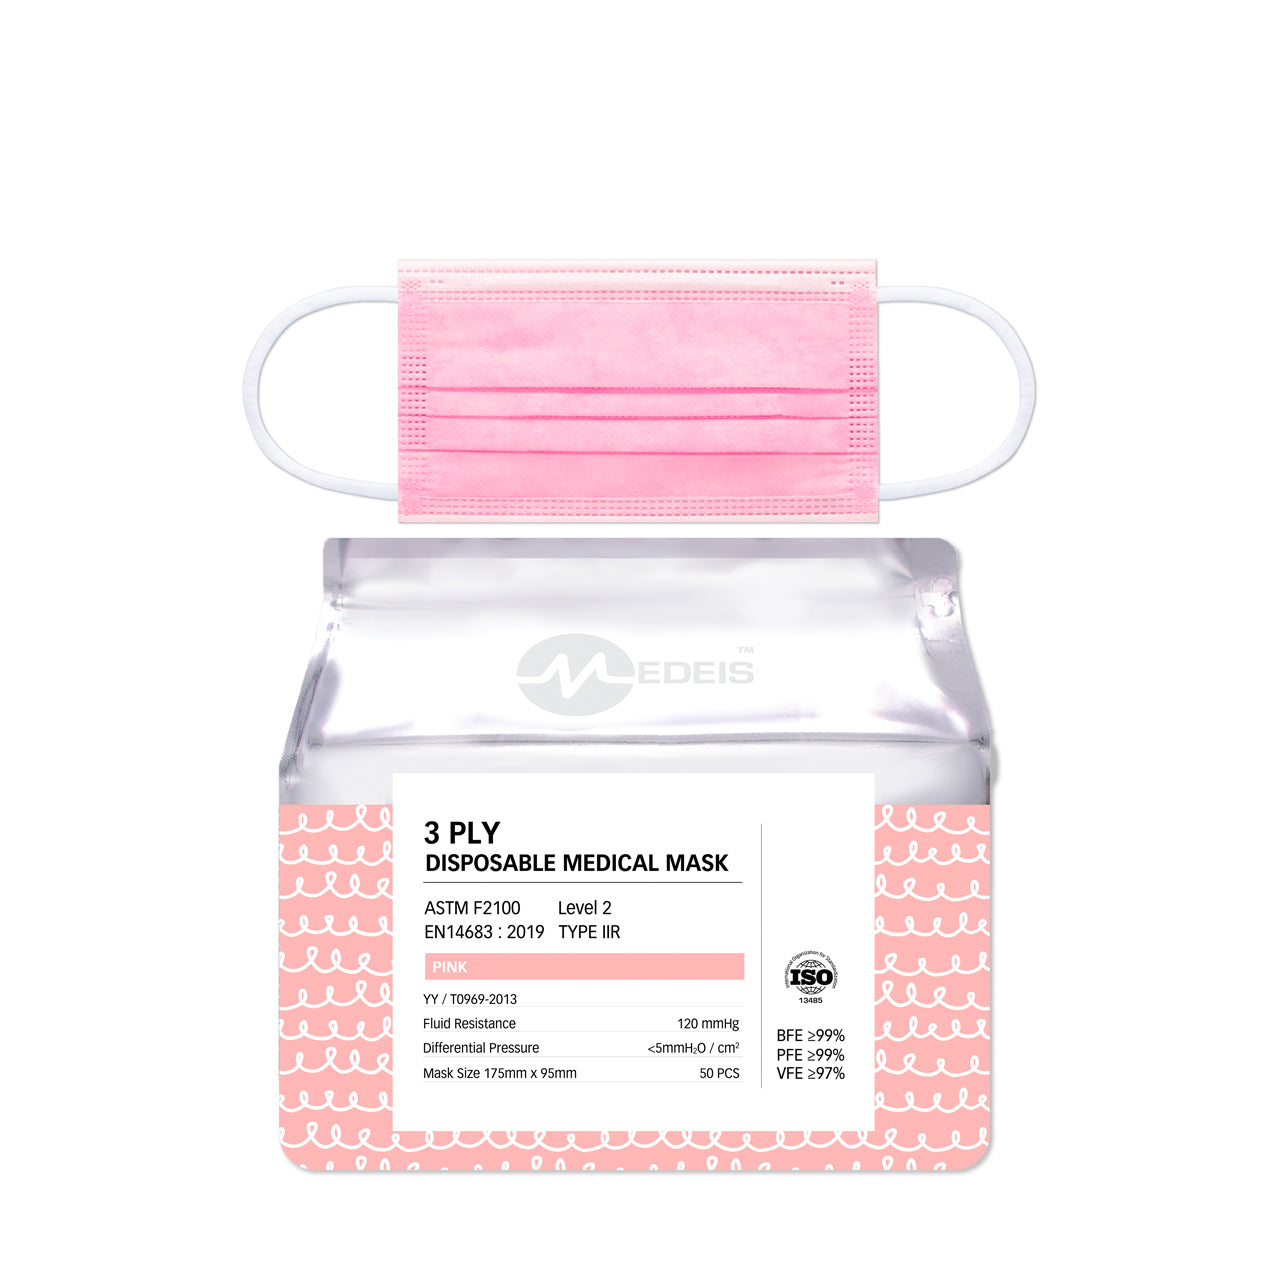 Medeis Disposable Medical Mask Pink 50PCS | Sasa Global eShop